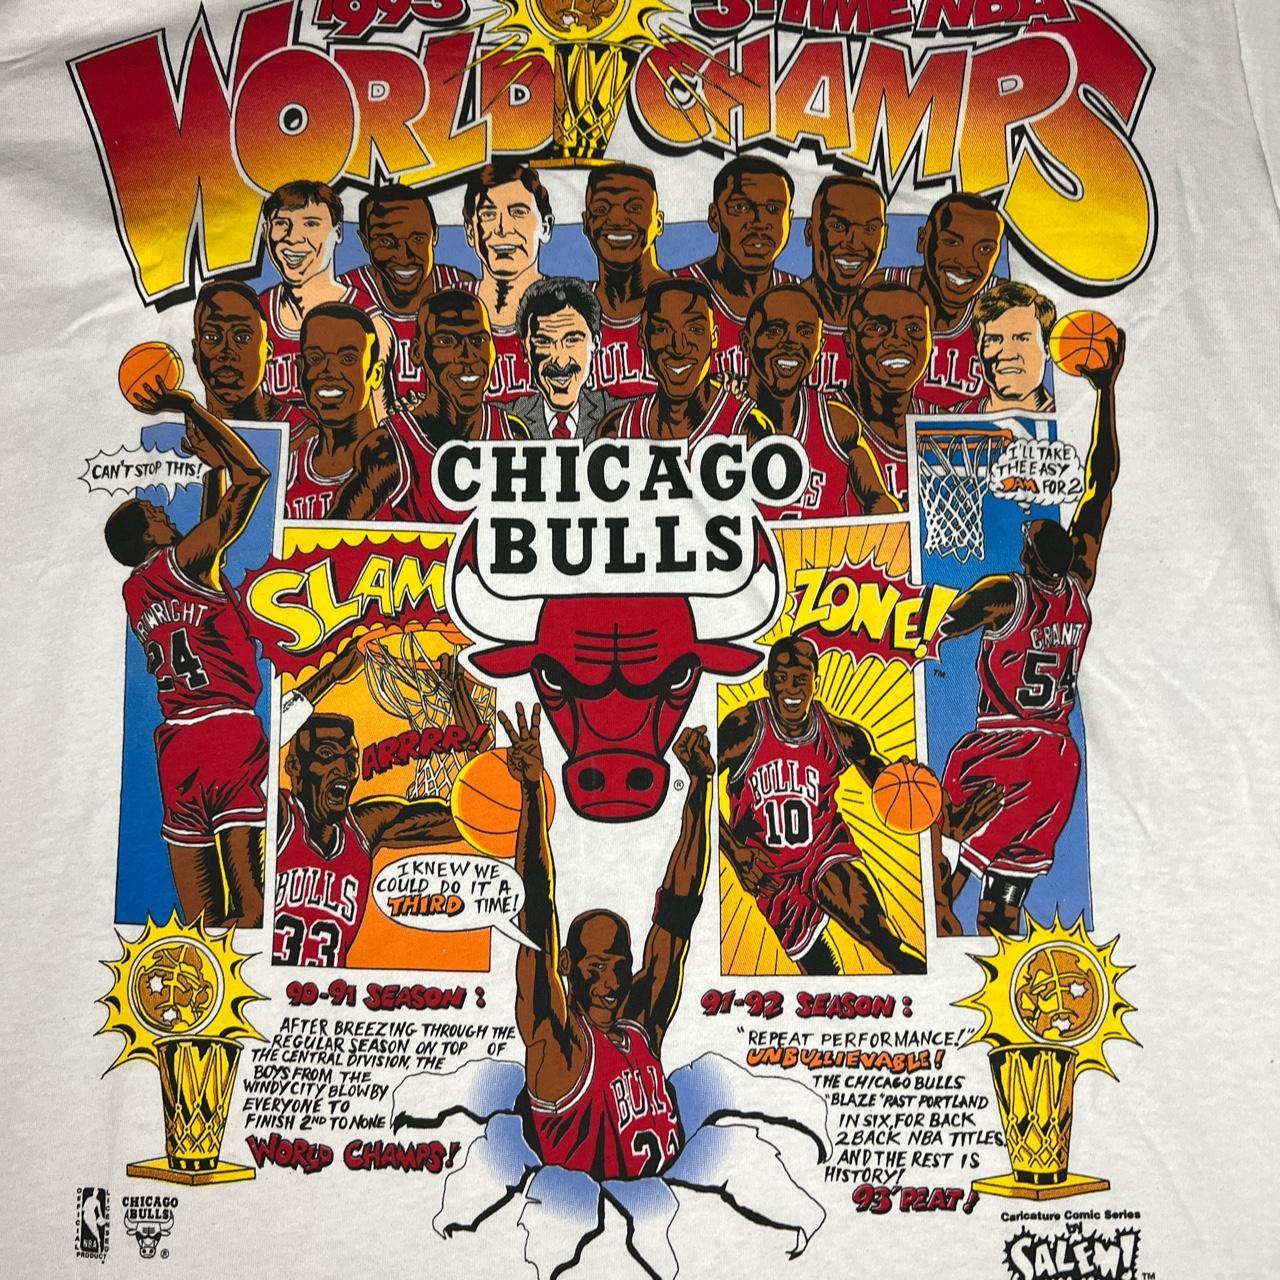 Retro NBA Chicago Bulls  Windy City Men's XL T-shirt